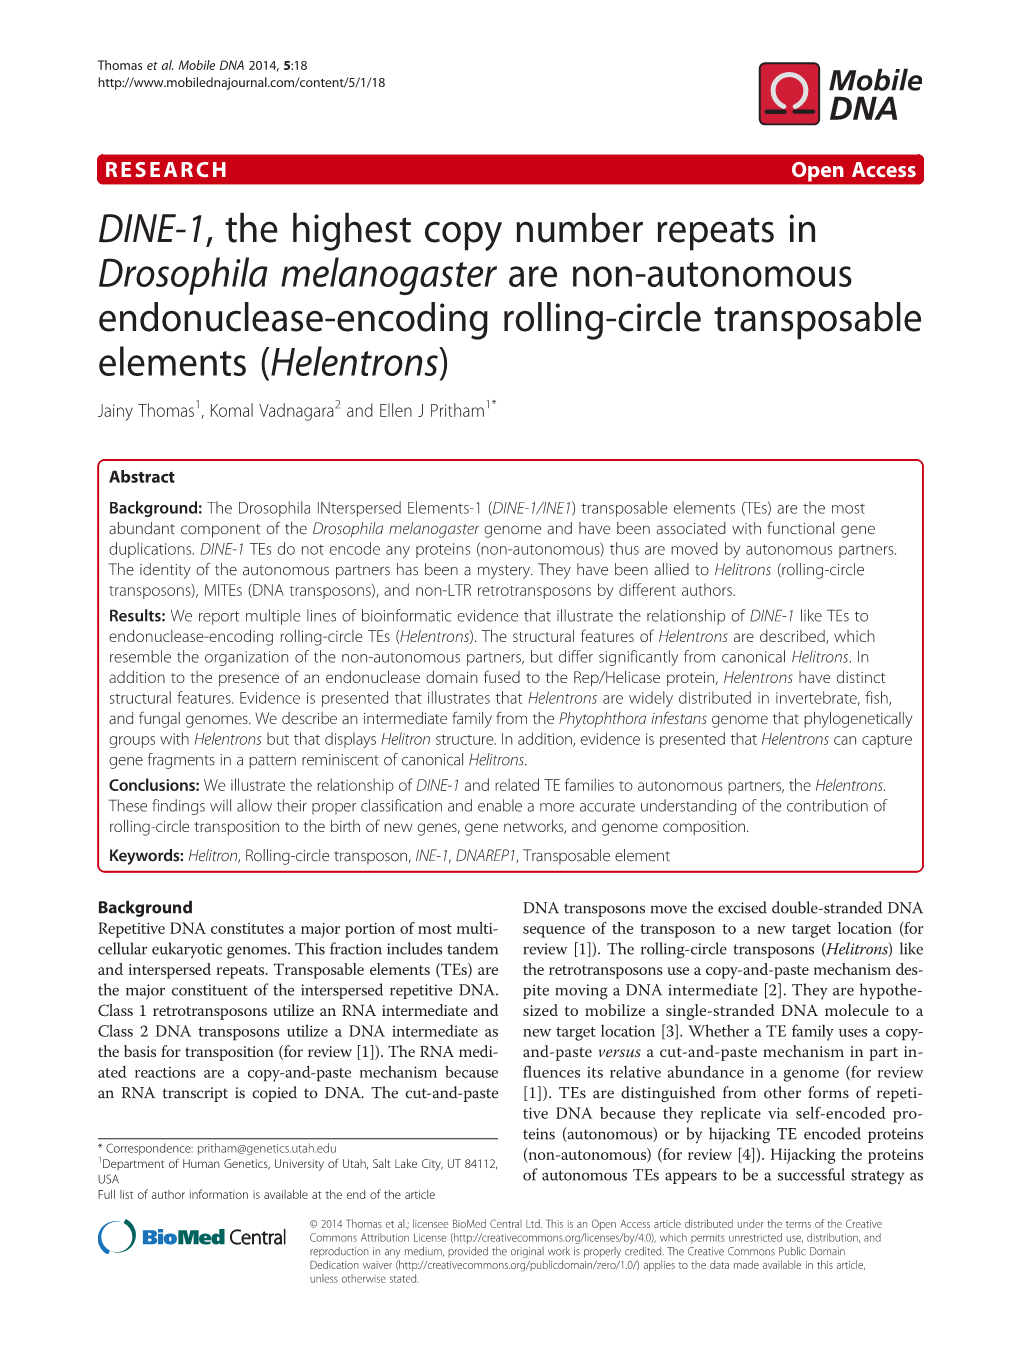 DINE-1, the Highest Copy Number Repeats in Drosophila Melanogaster